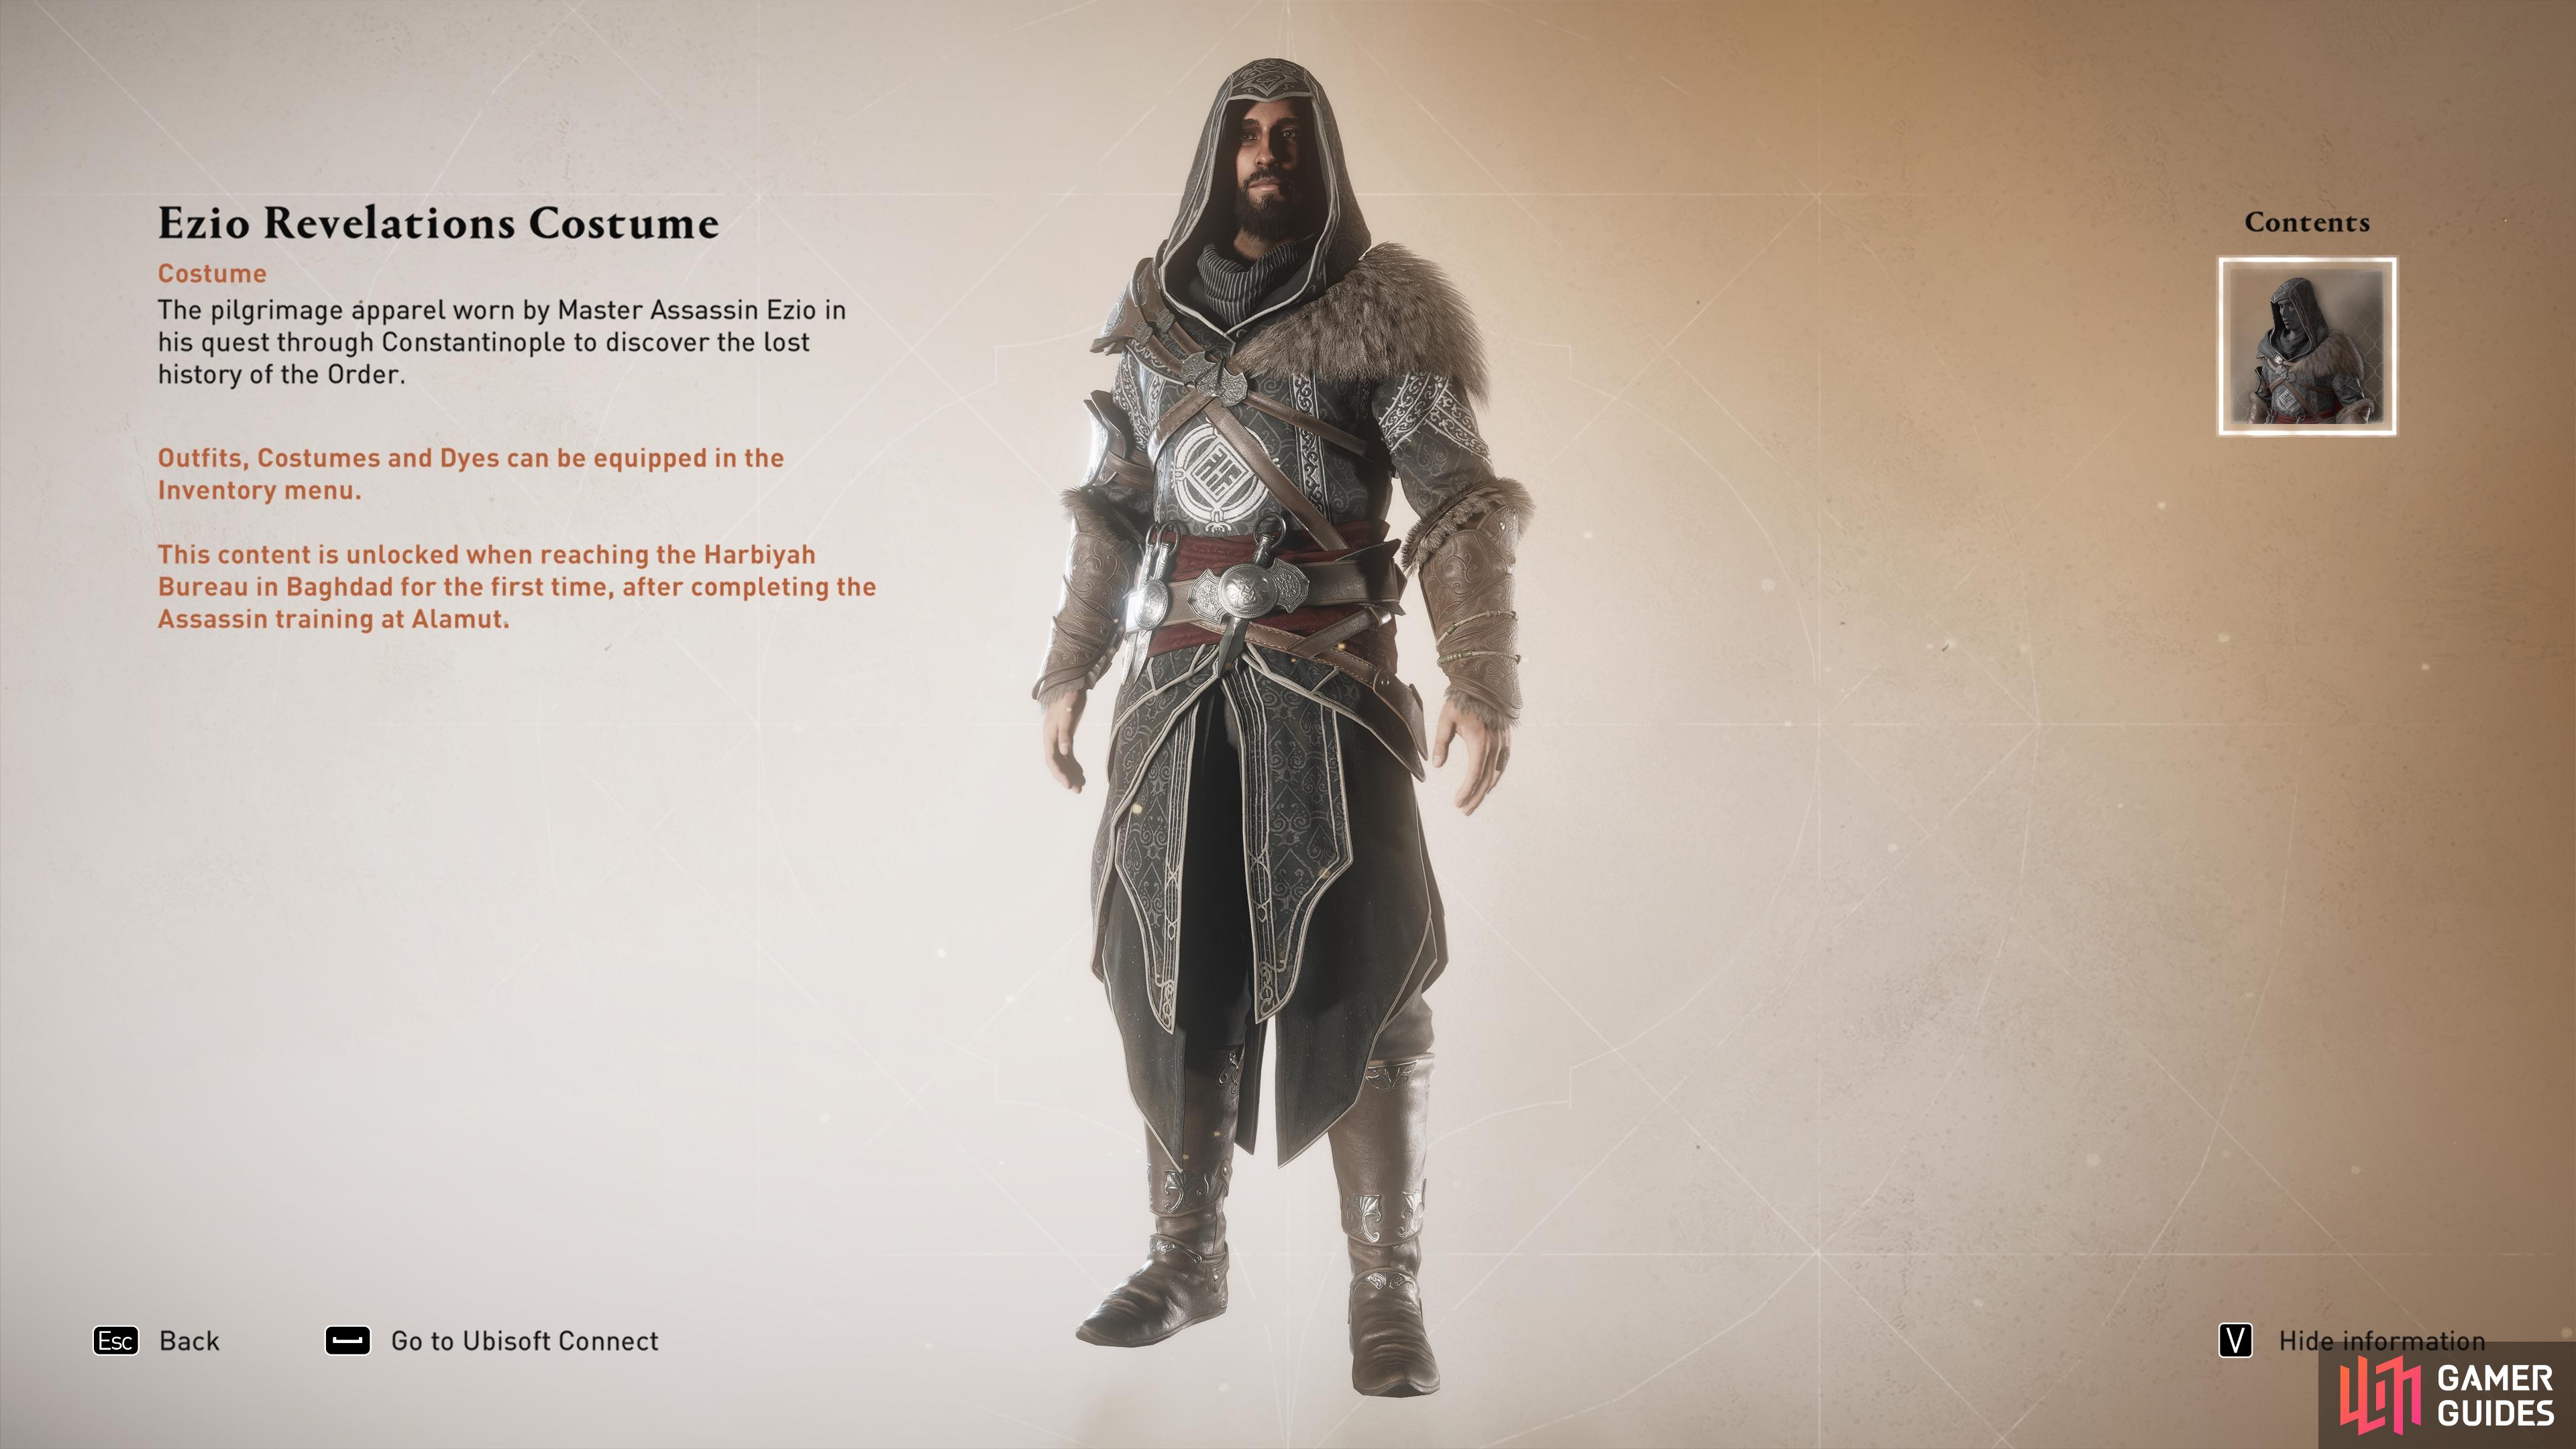 The Ezio legacy costume, worn by Ezio during his adventures in Assassin’s Creed Revelations.